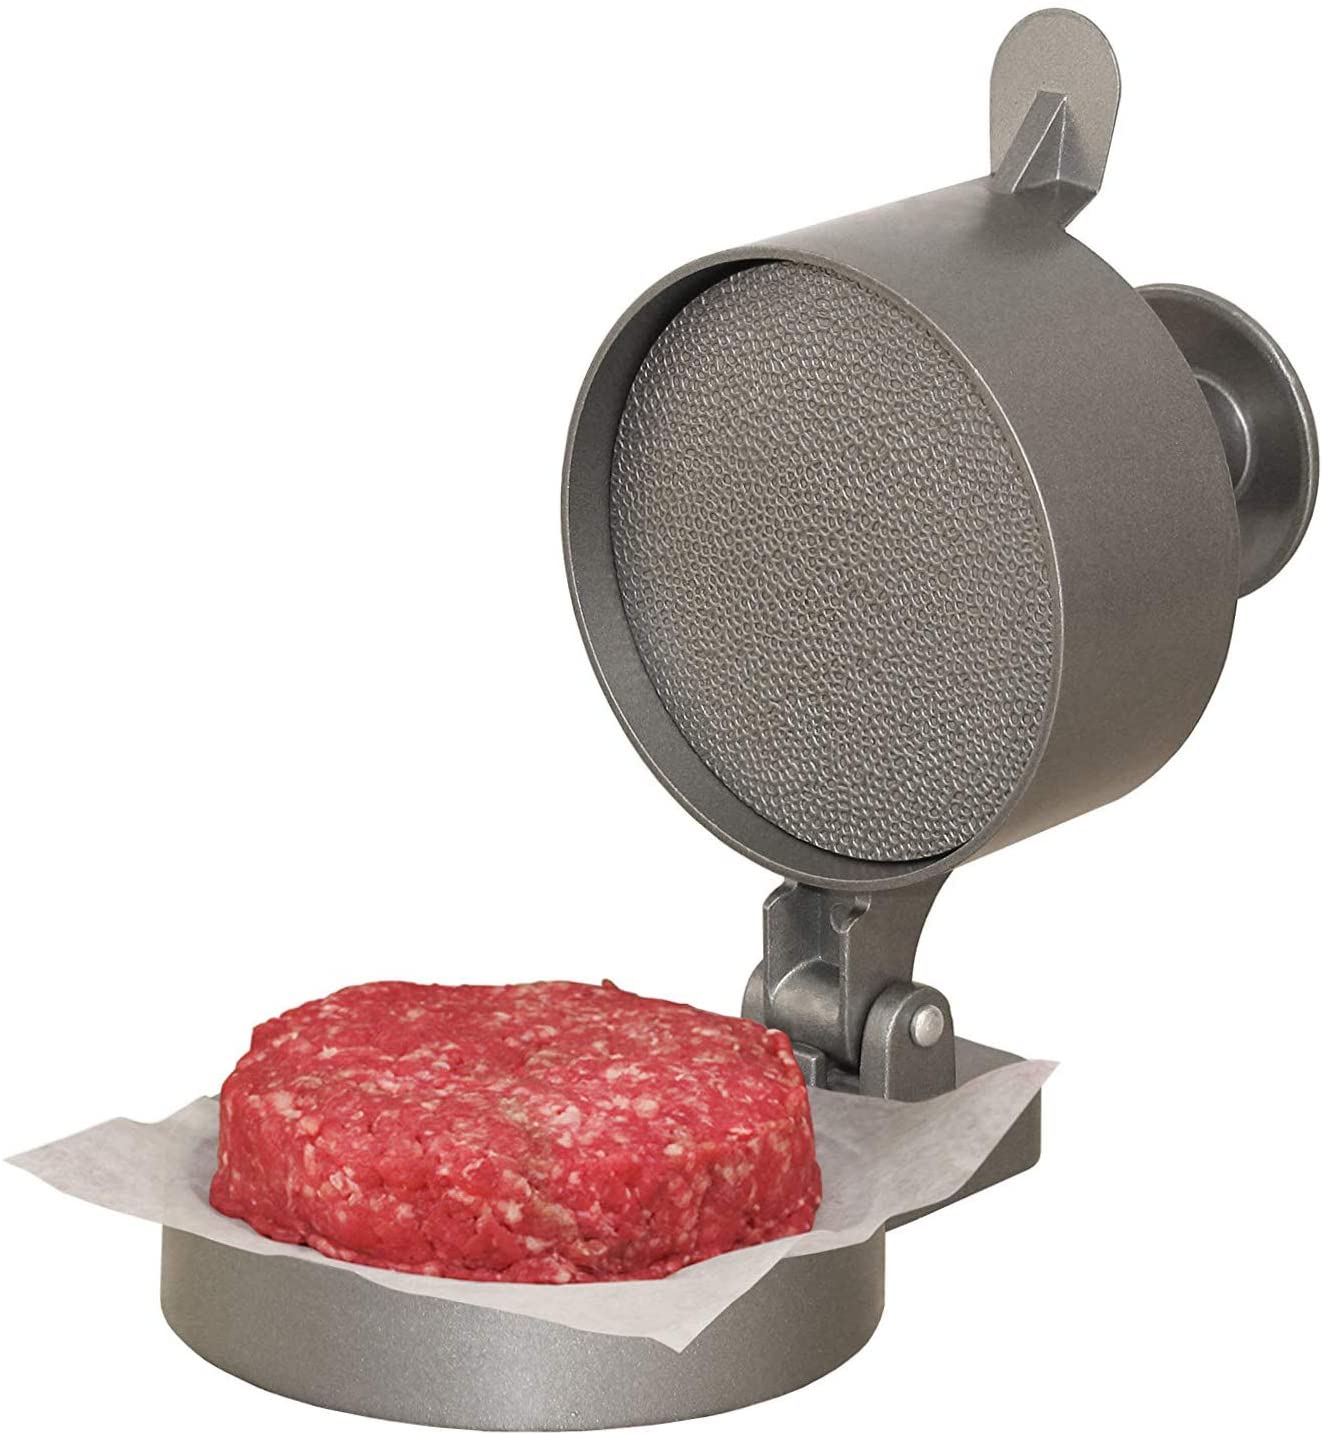 A burger press with raw burger